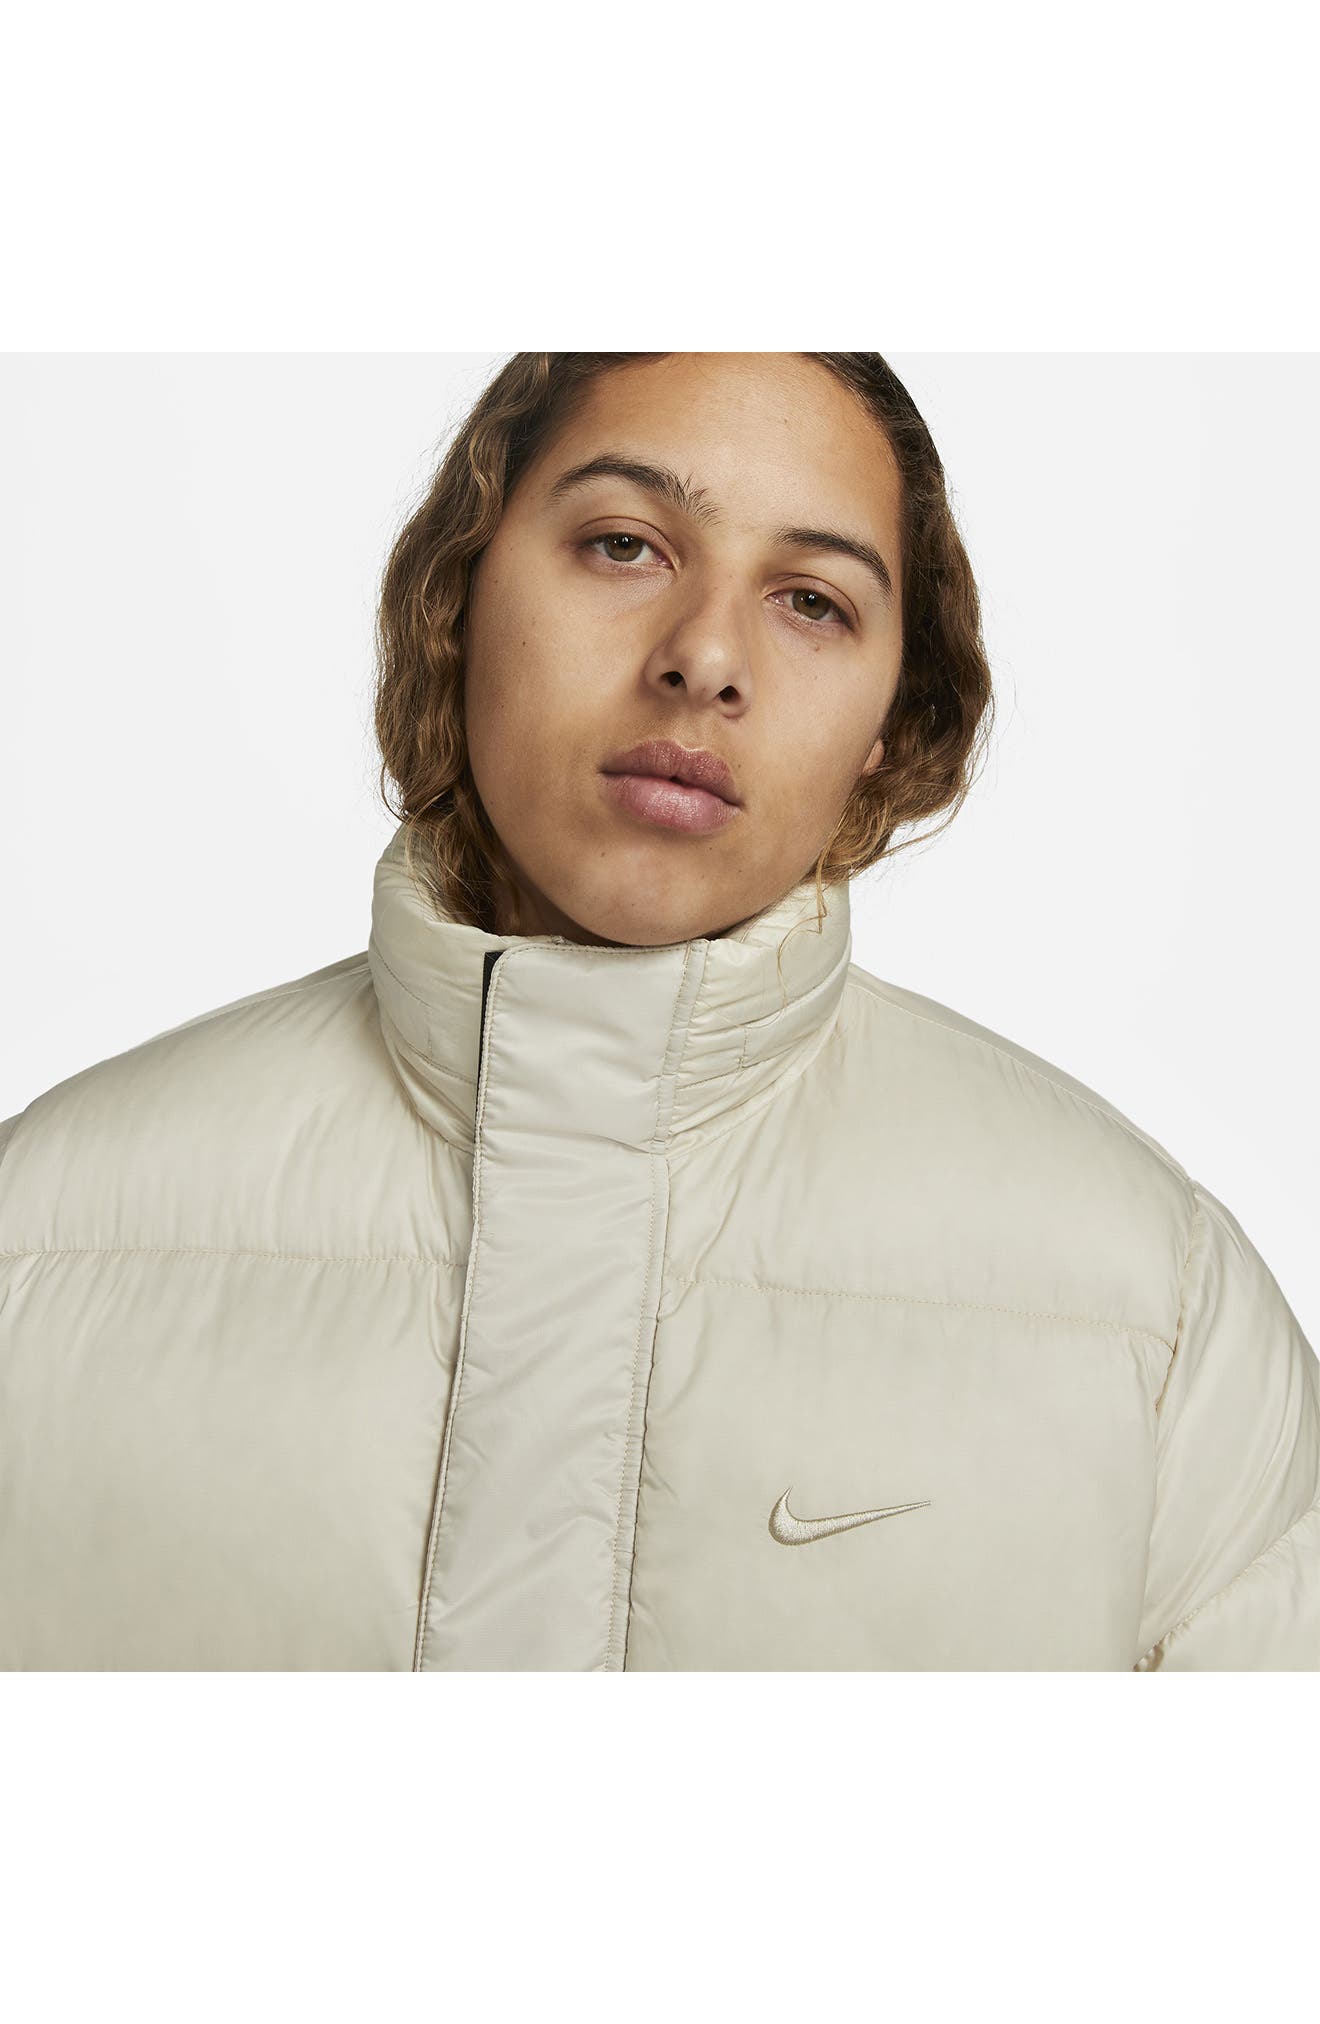 Nike New York Yankees Women's Therma Full Zip Fleece Jacket - Macy's